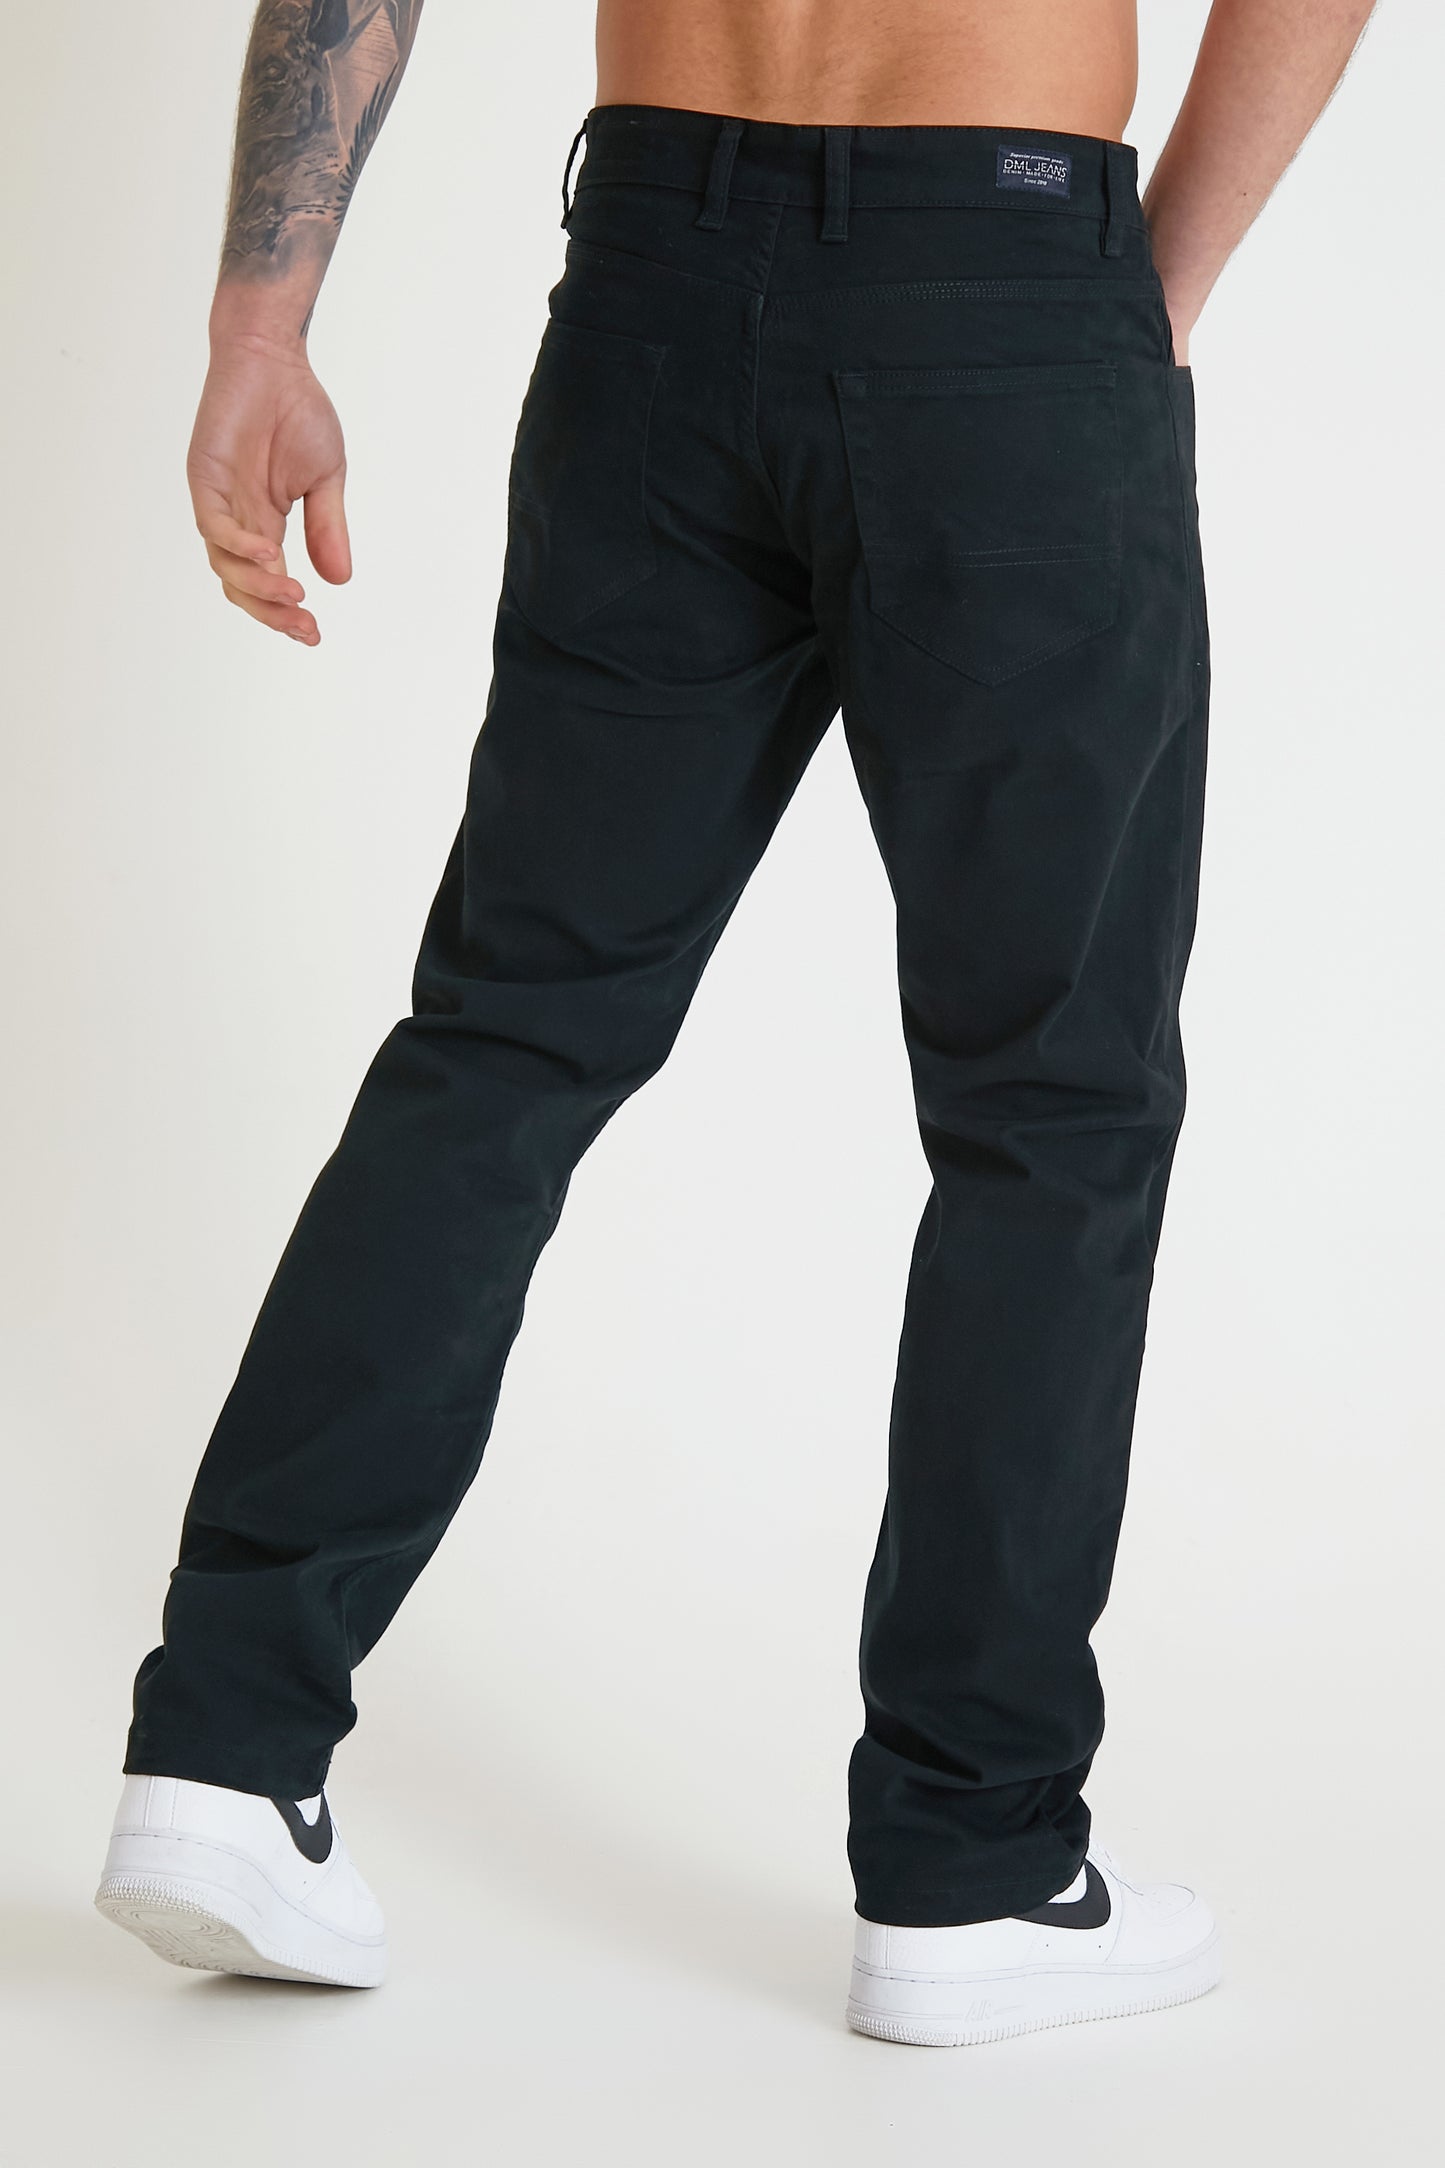 HAWKINS 5 pocket chino pant in premium cotton twill - BLACK